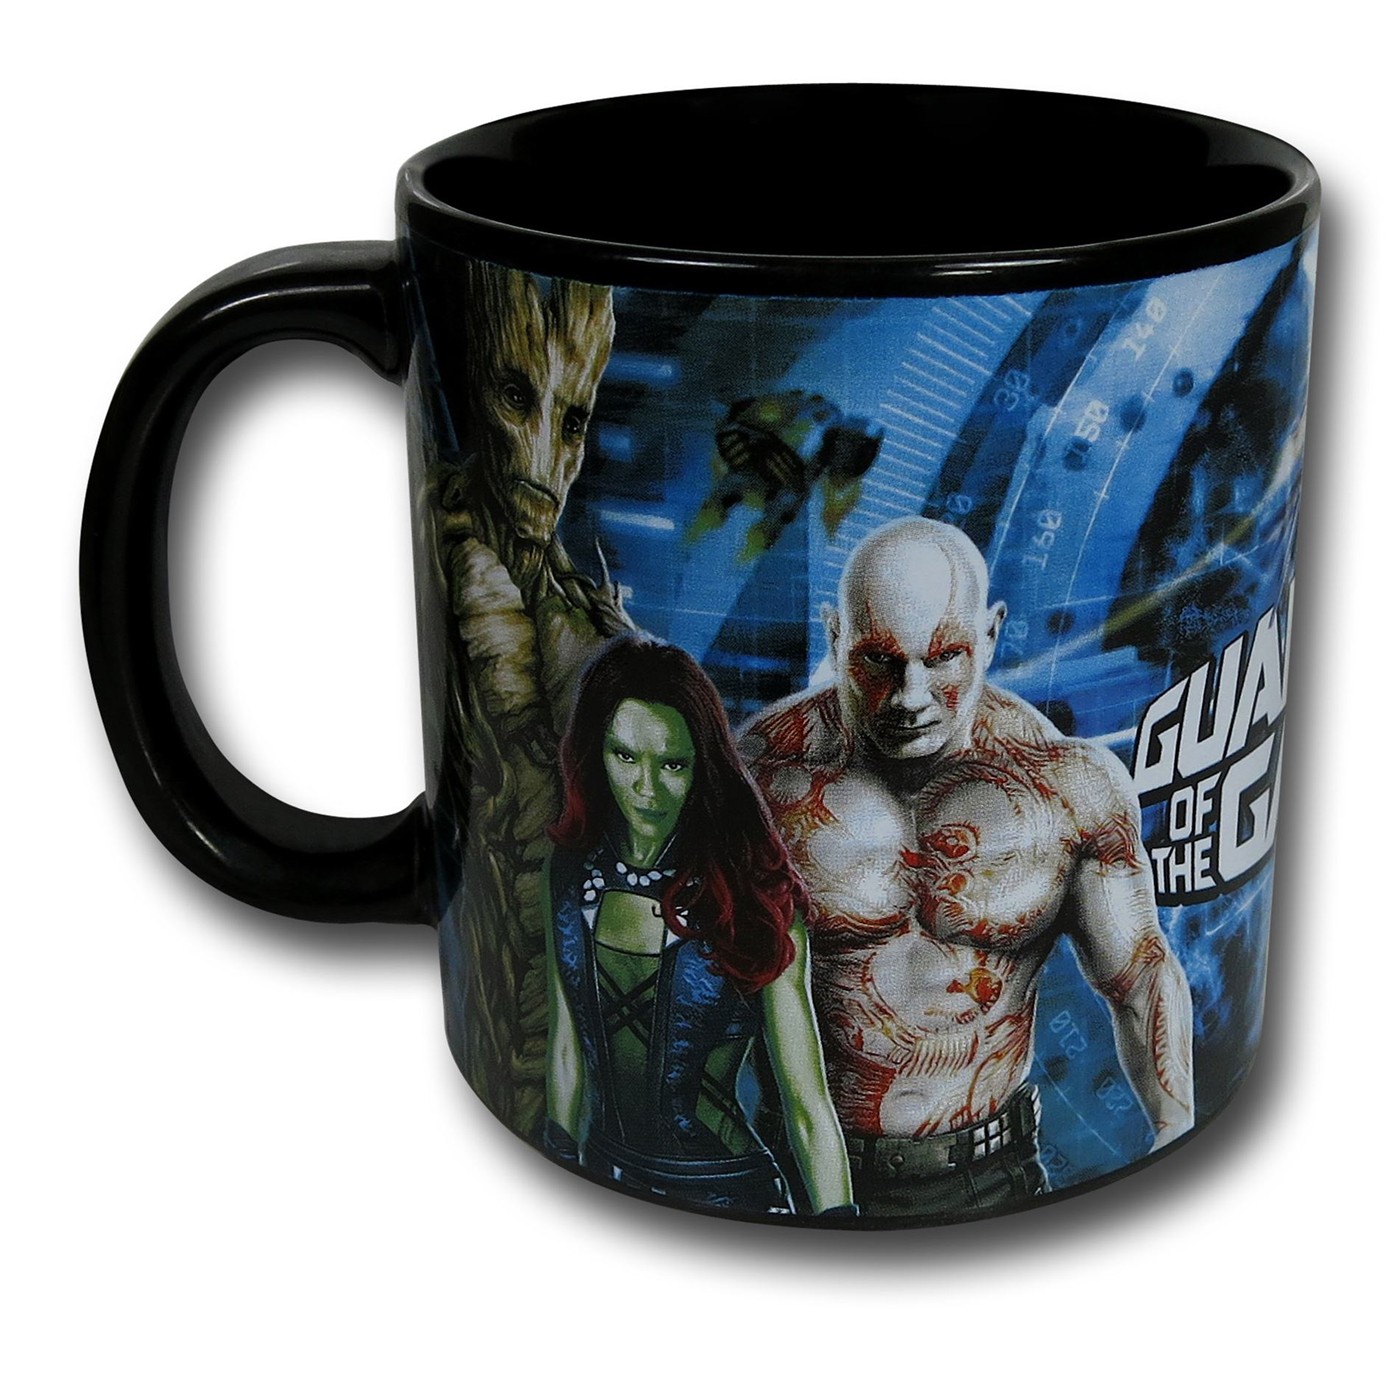 Guardians of the Galaxy Ceramic Mug